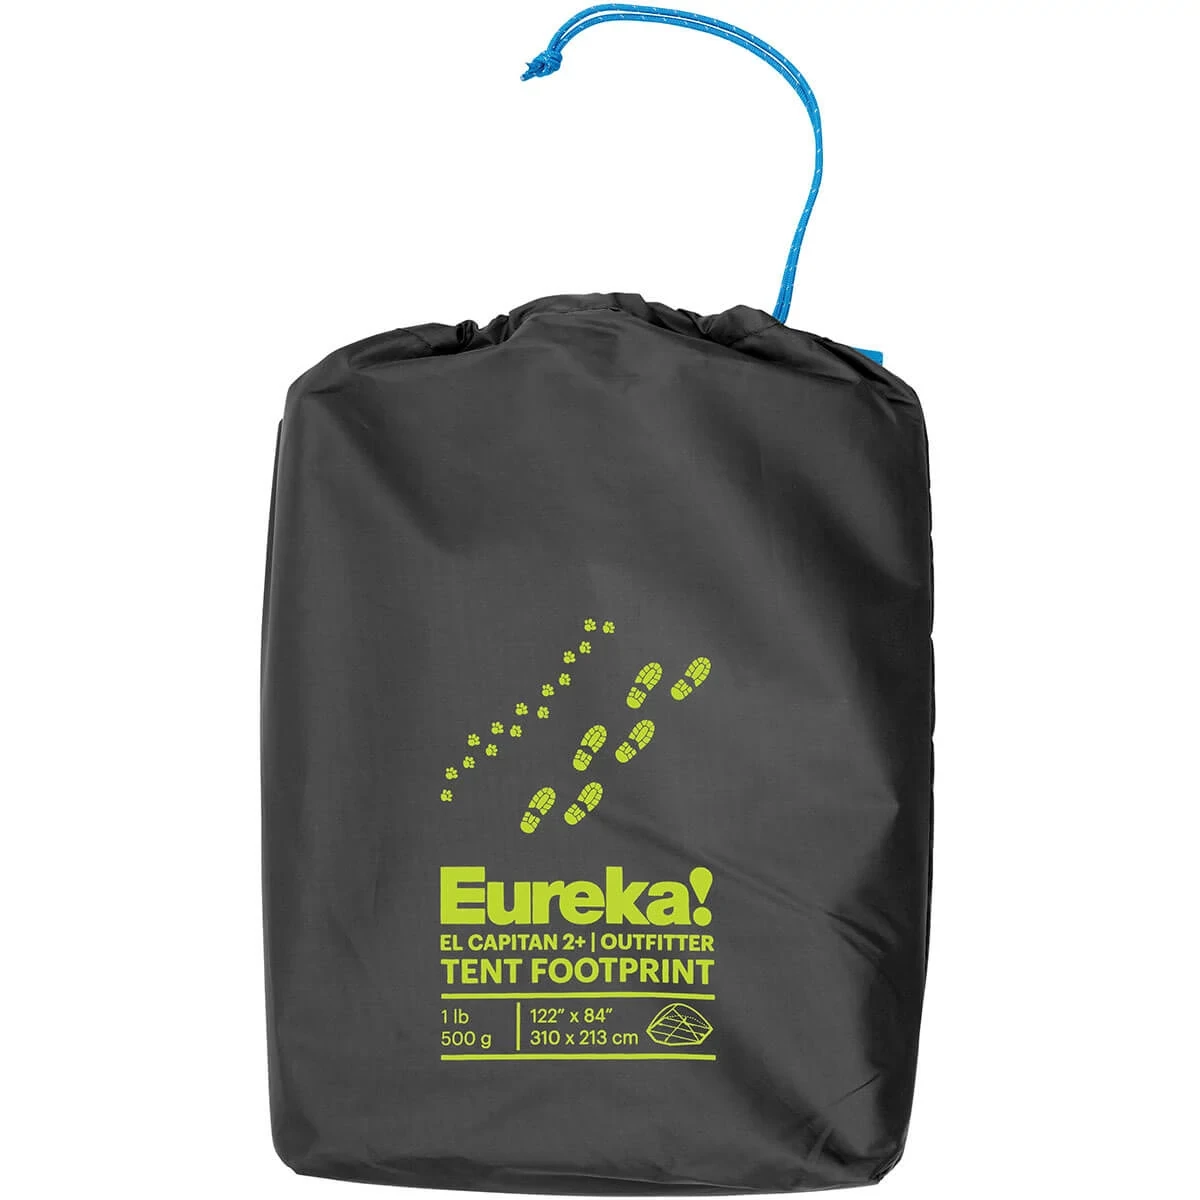 Eureka! El Capitan 2+ Outfitter Tent Footprint in Pack